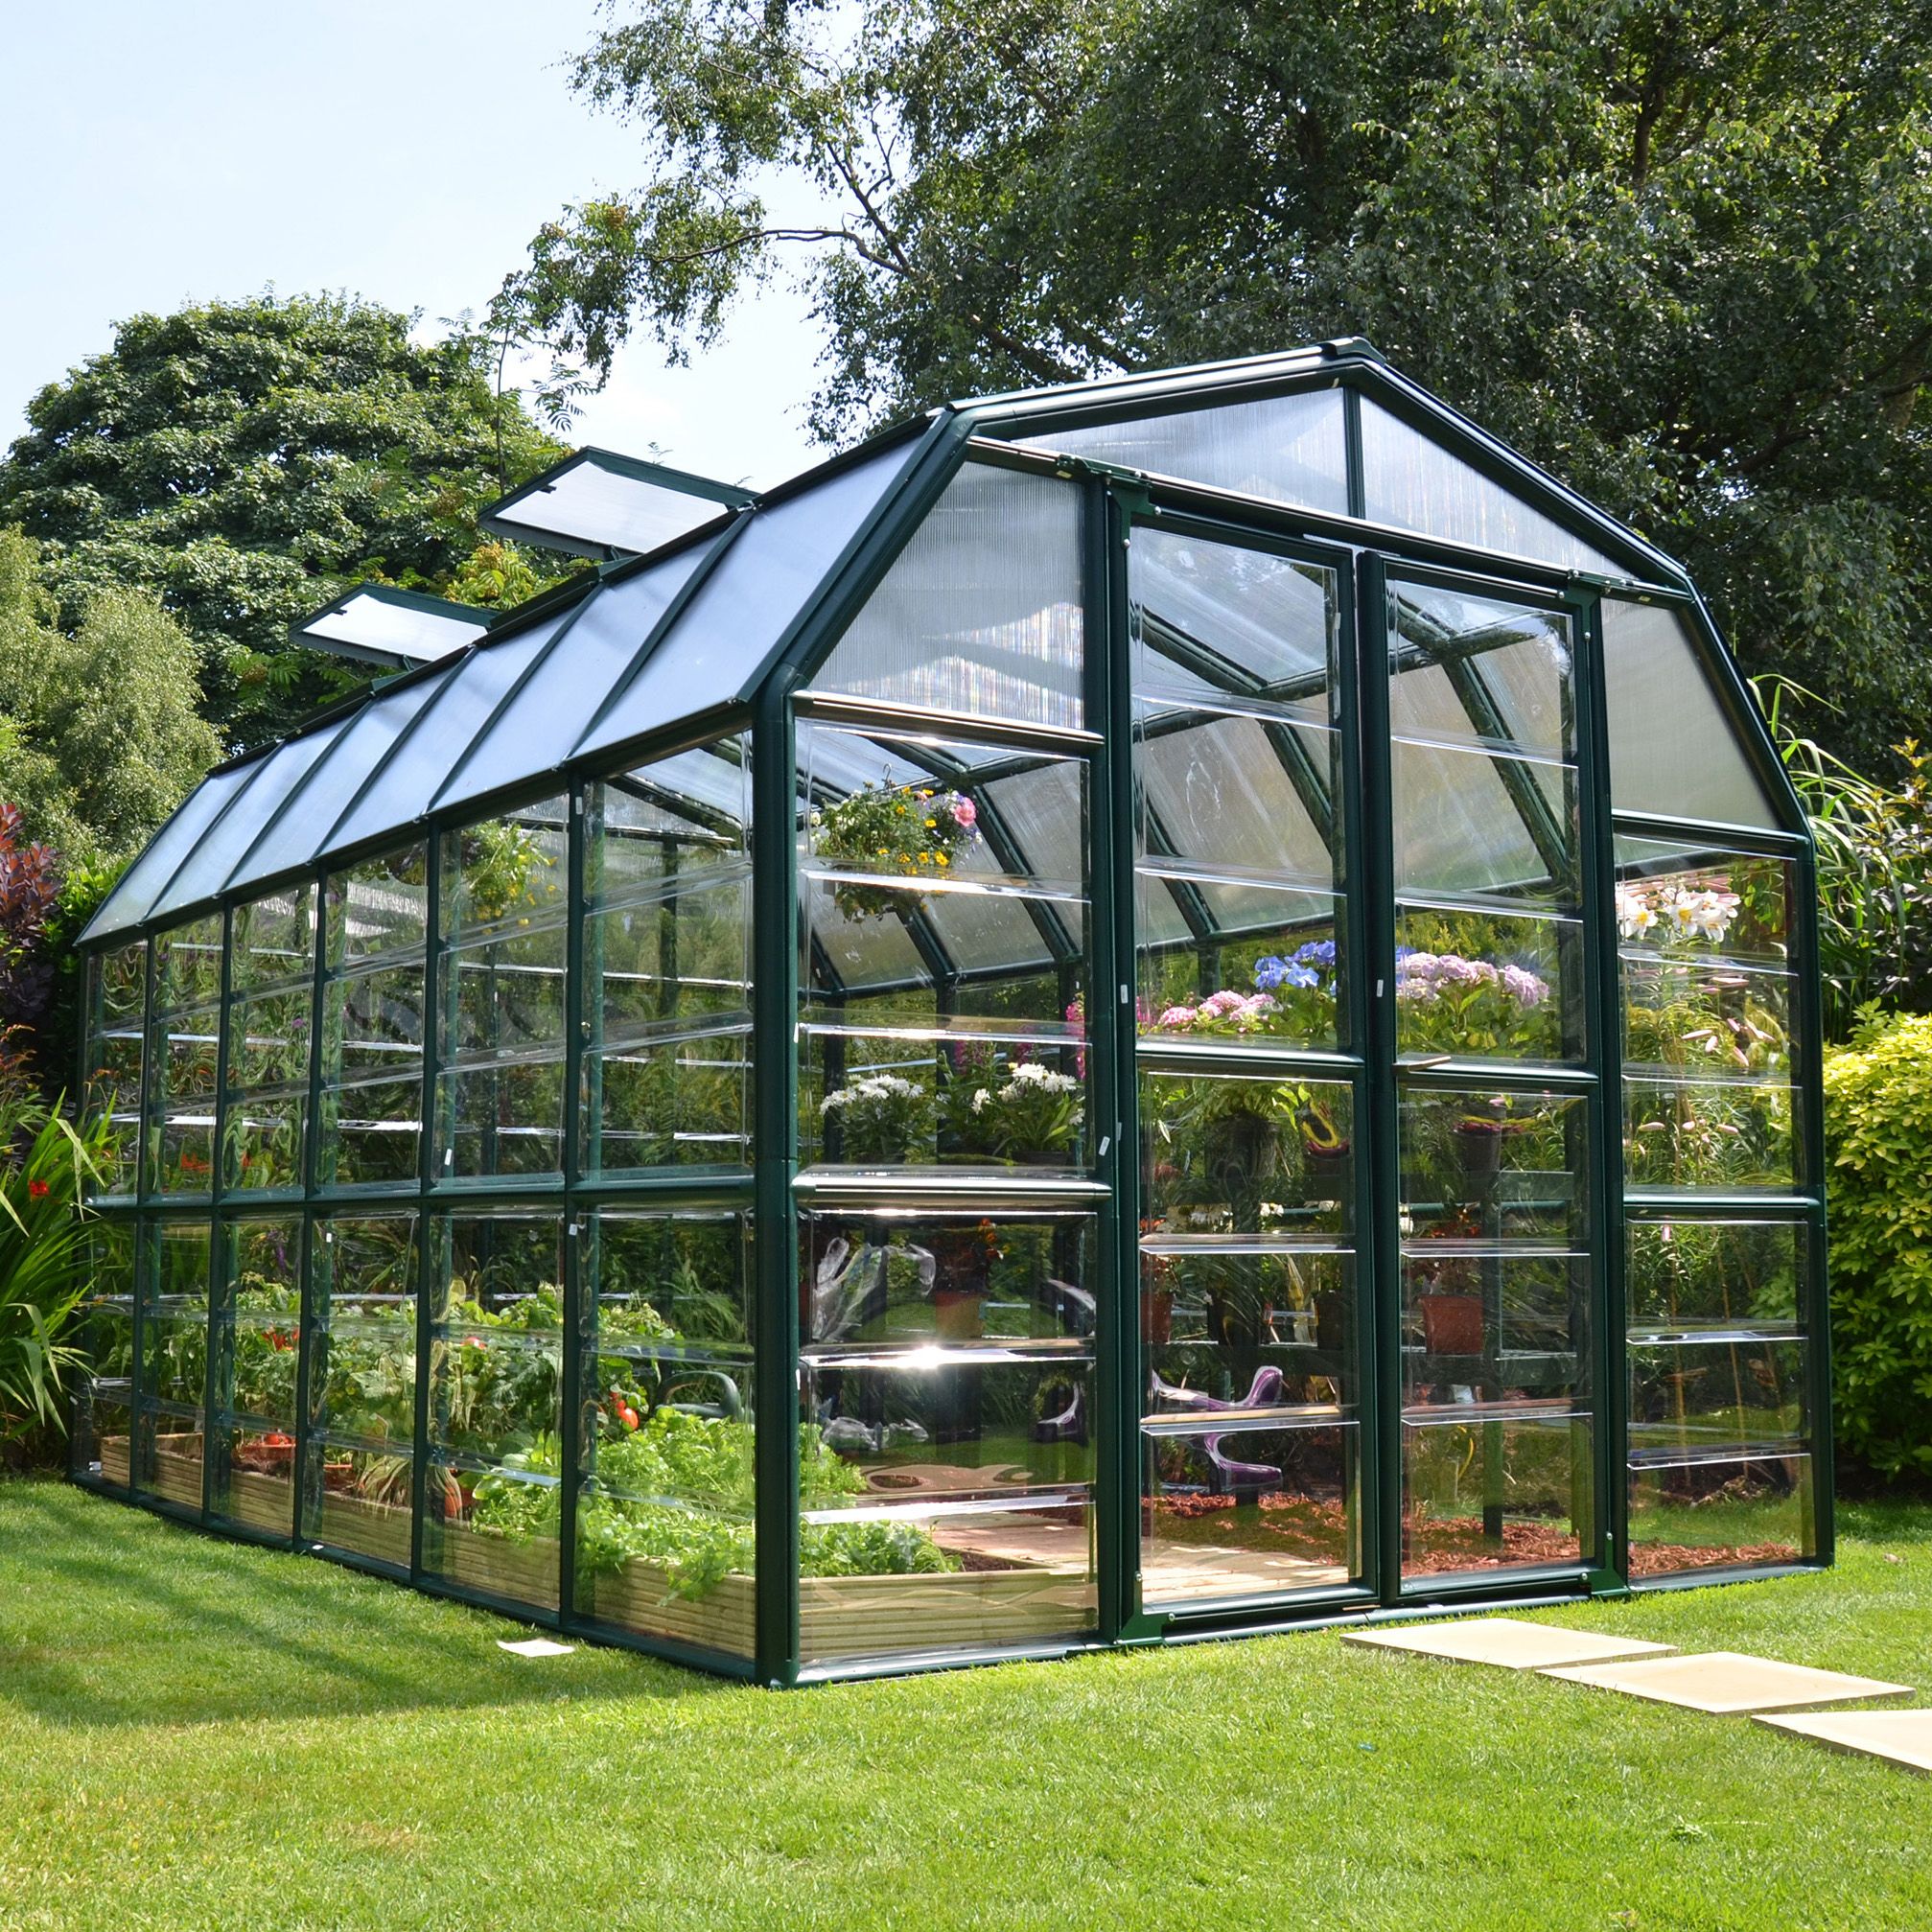 Rion Grand Gardner 8x12 Acrylic Glass Greenhouse Departments Diy At Bandq